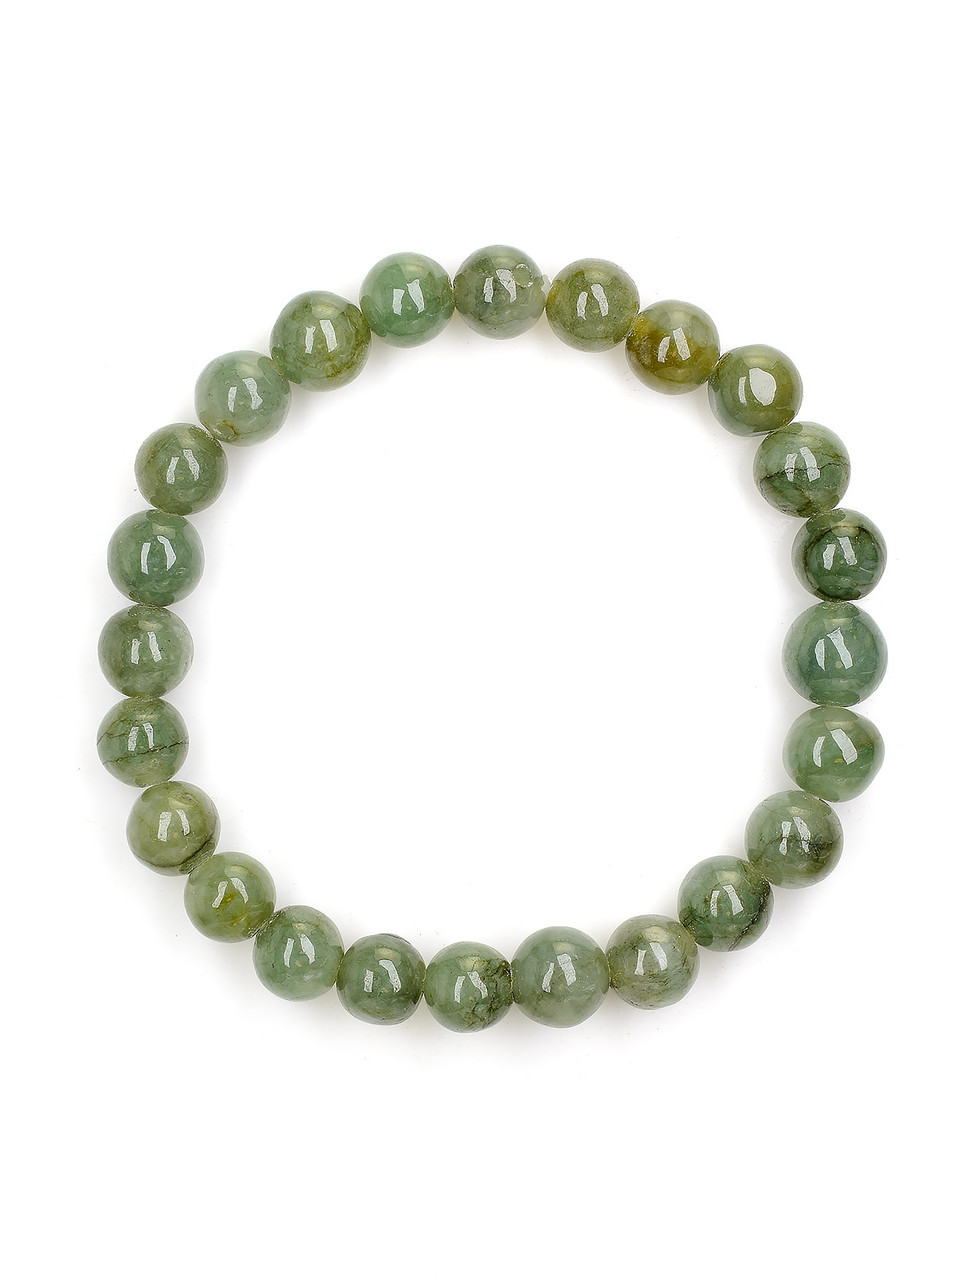 Buy 14mm Natural Burmese Jadeite Beads Stretch Bracelet, Large White Green Jade  Beads Bracelet for Men, Gift for Husband, Fathers Day Gift Online in India  - Etsy